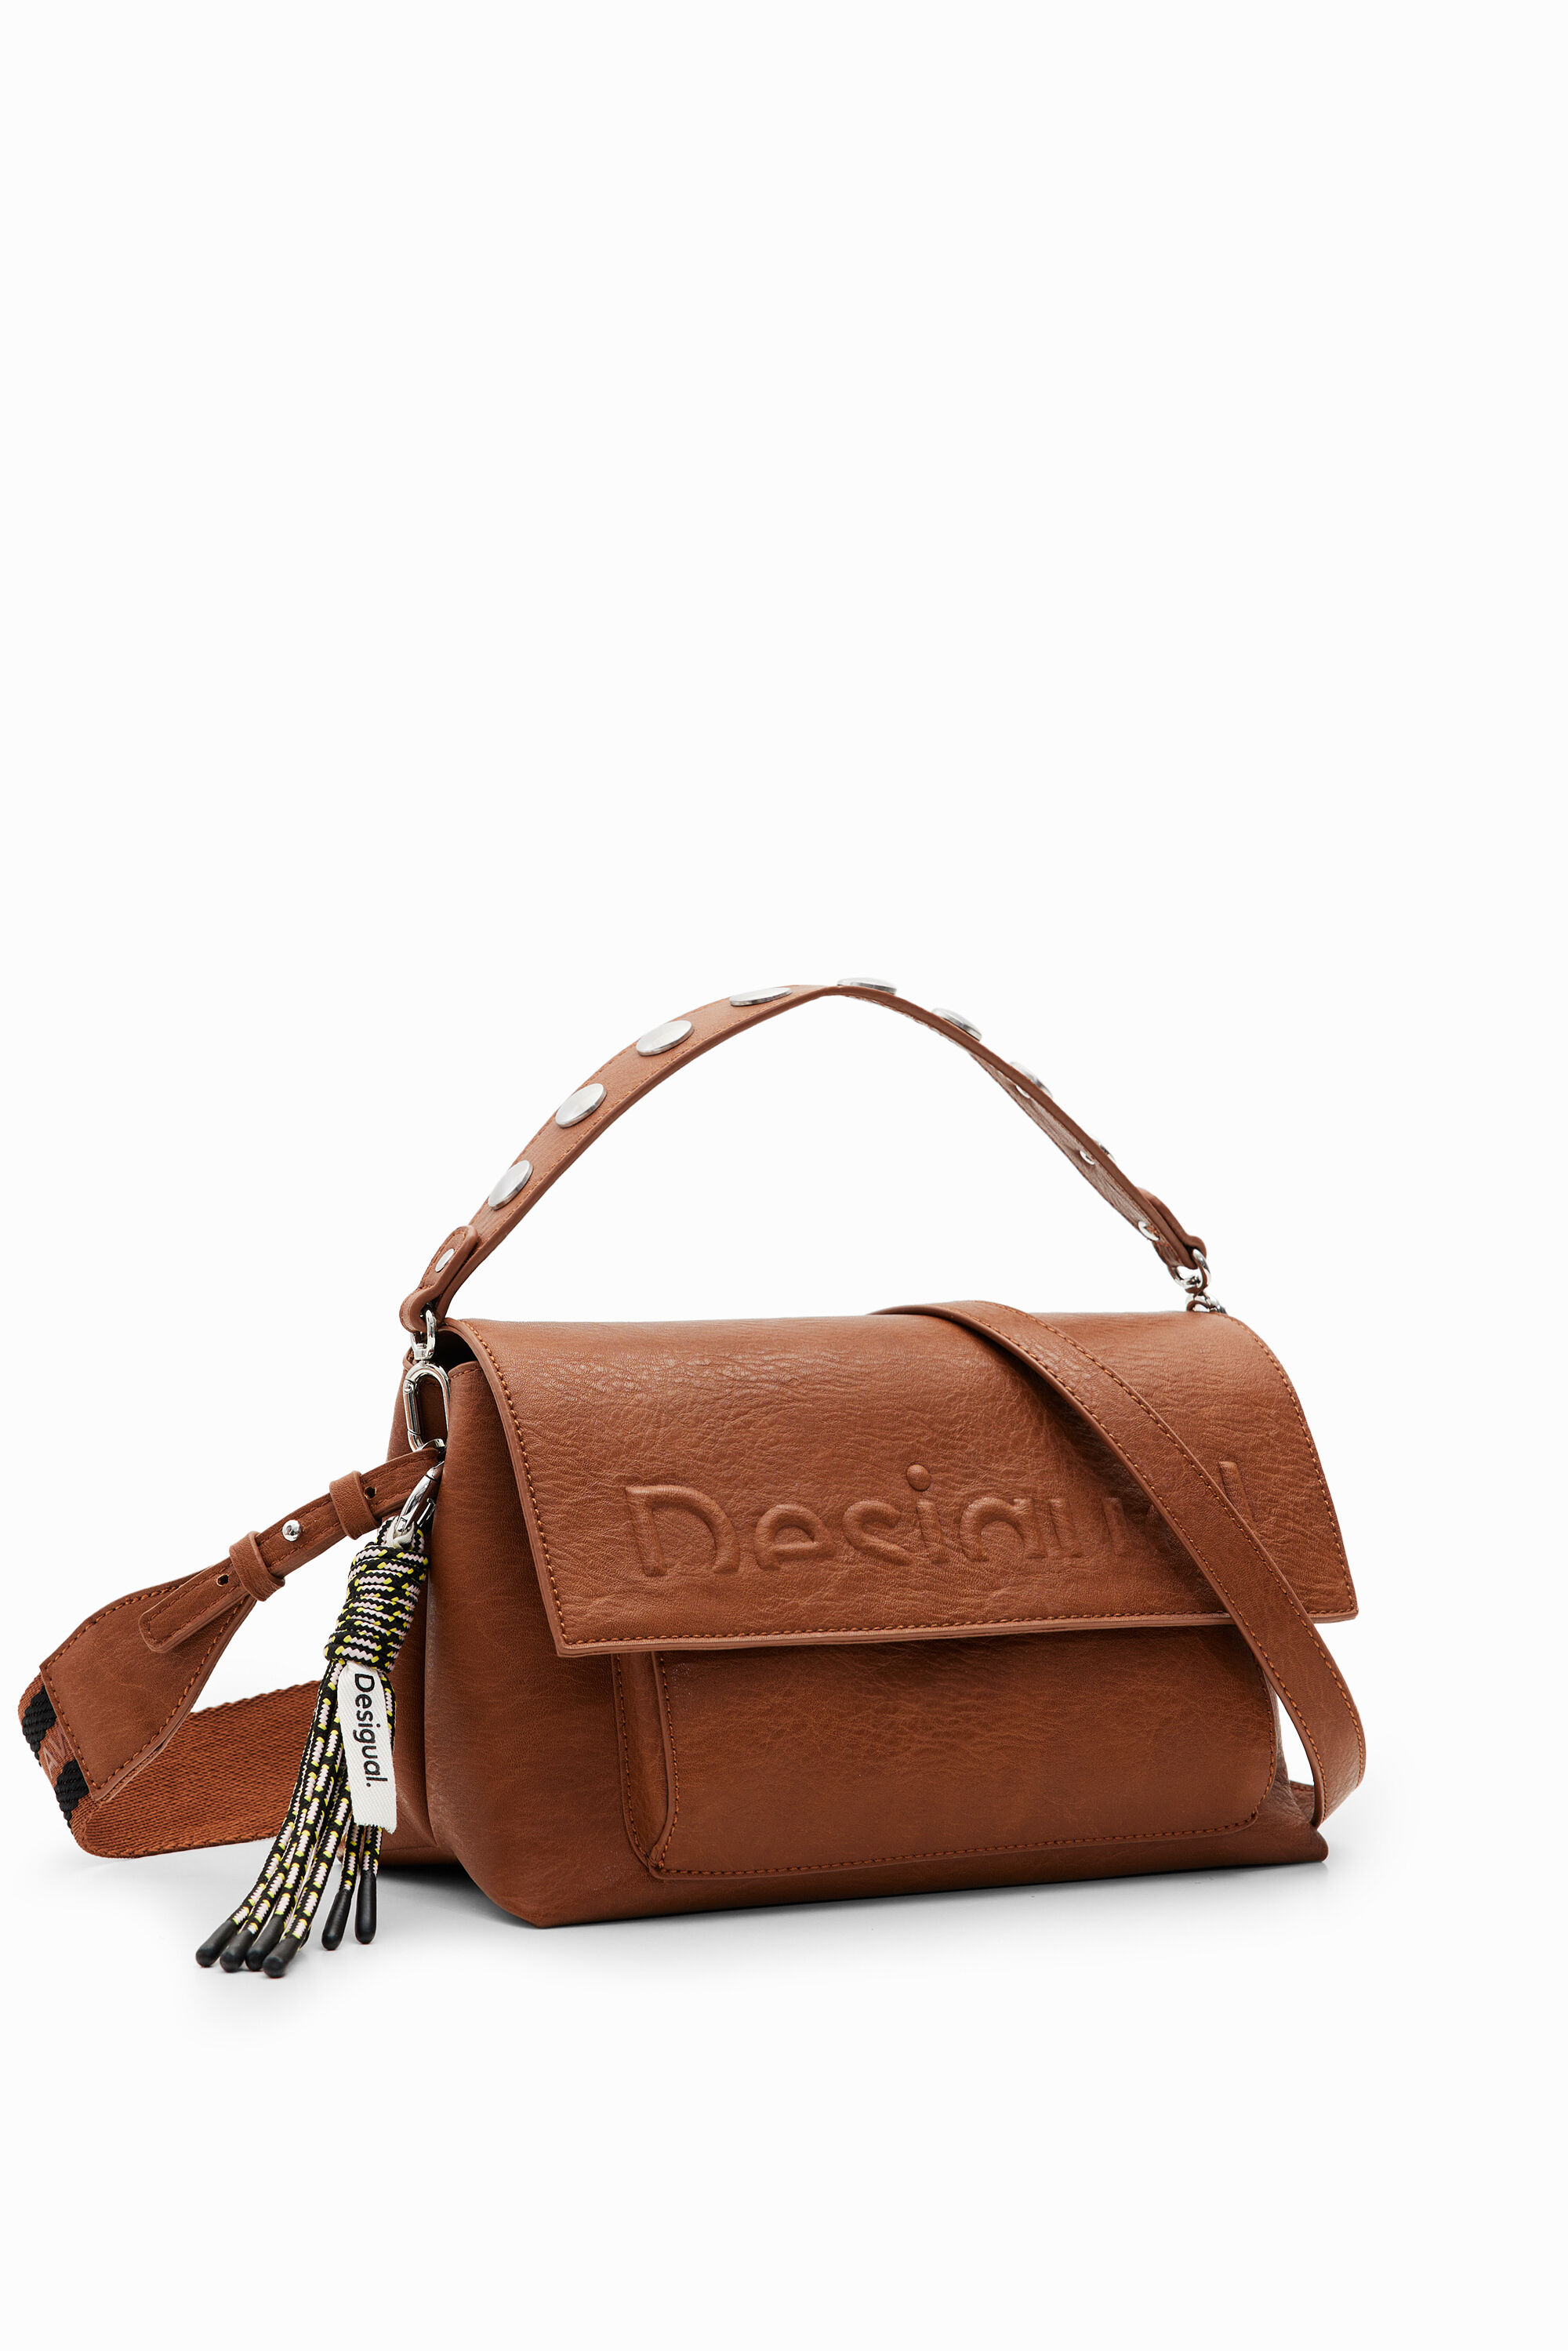 Desigual Midsize half-logo crossbody bag